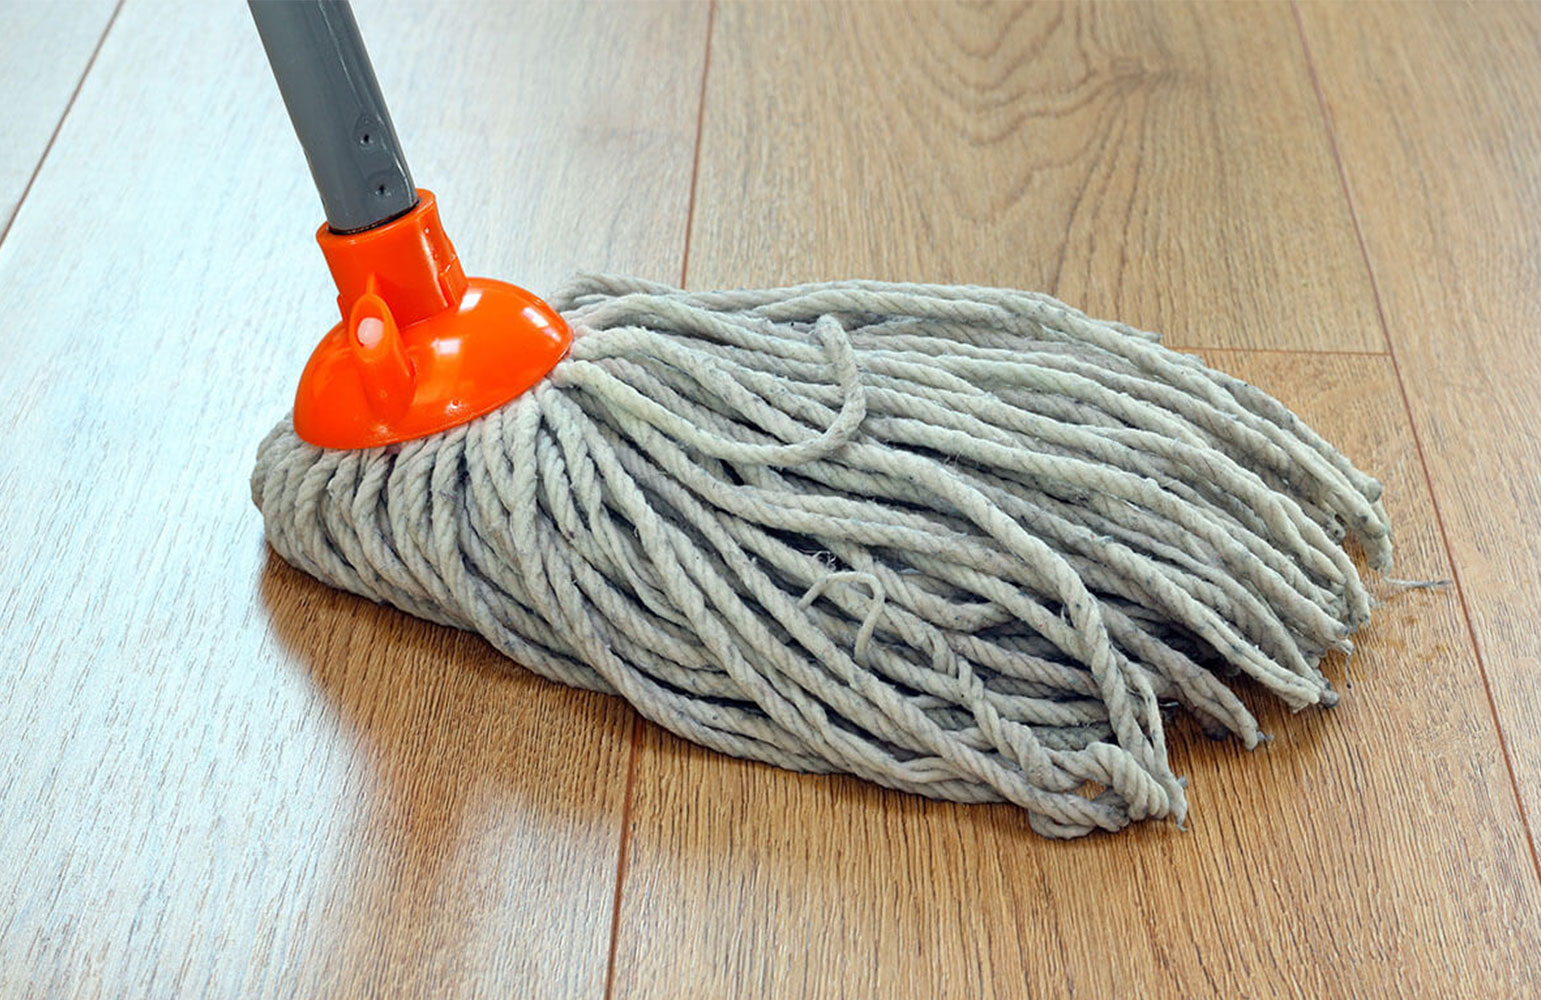 Hardwood floor cleaning | Carpet Source